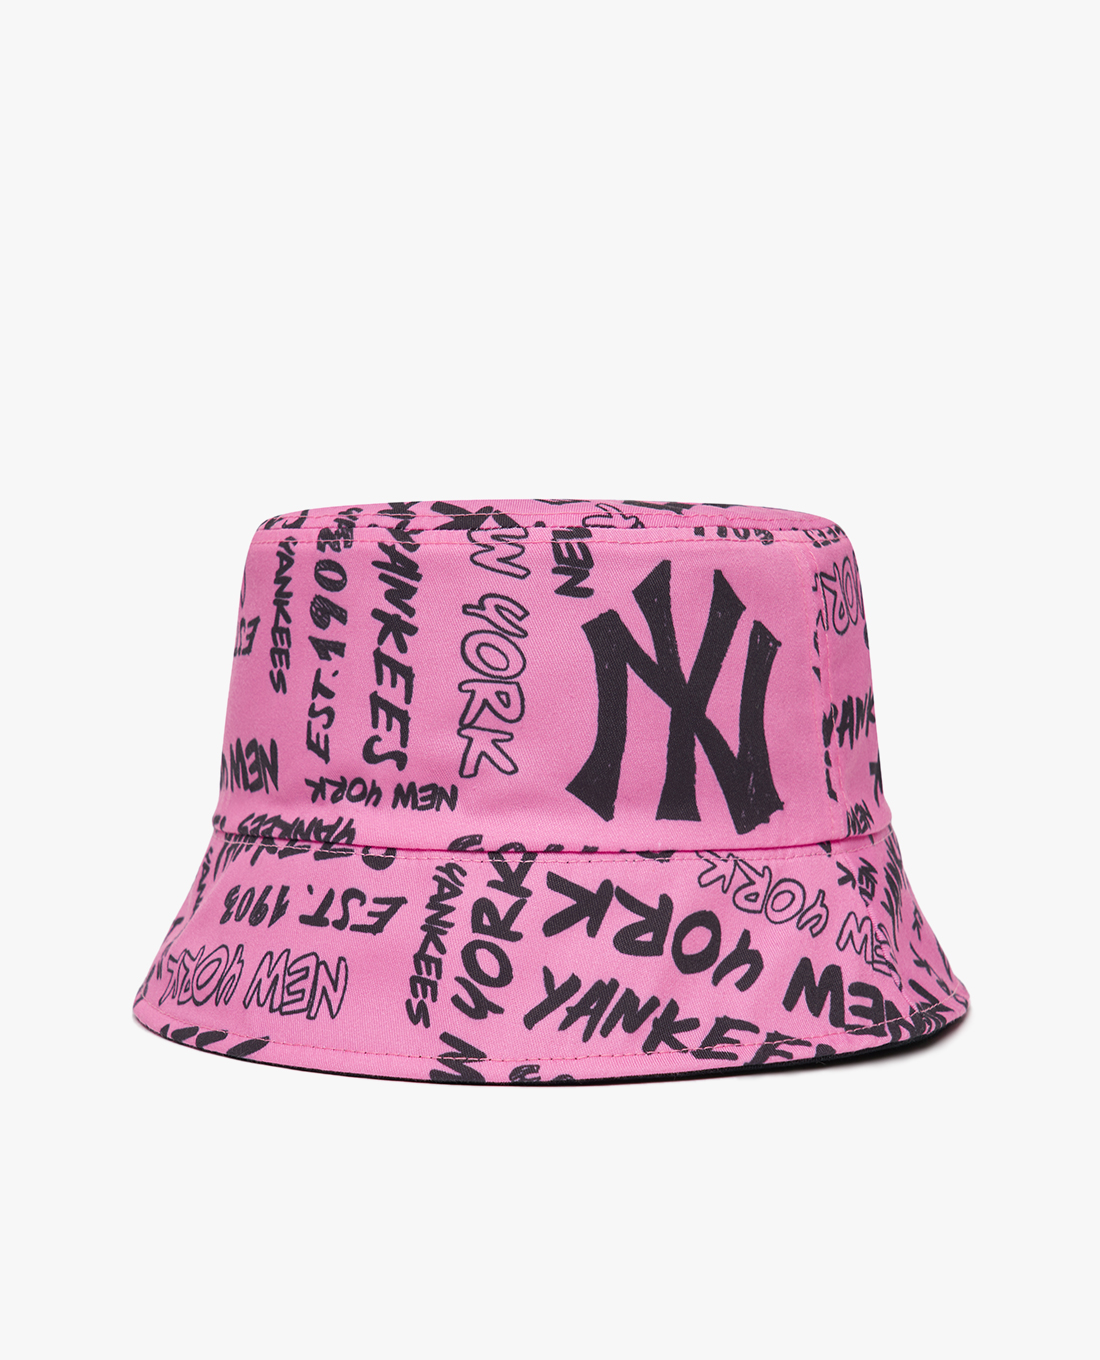 New York Yankees Hat MLB Pink Adjustable Cap Hat New York Yankees Pink Hat   eBay